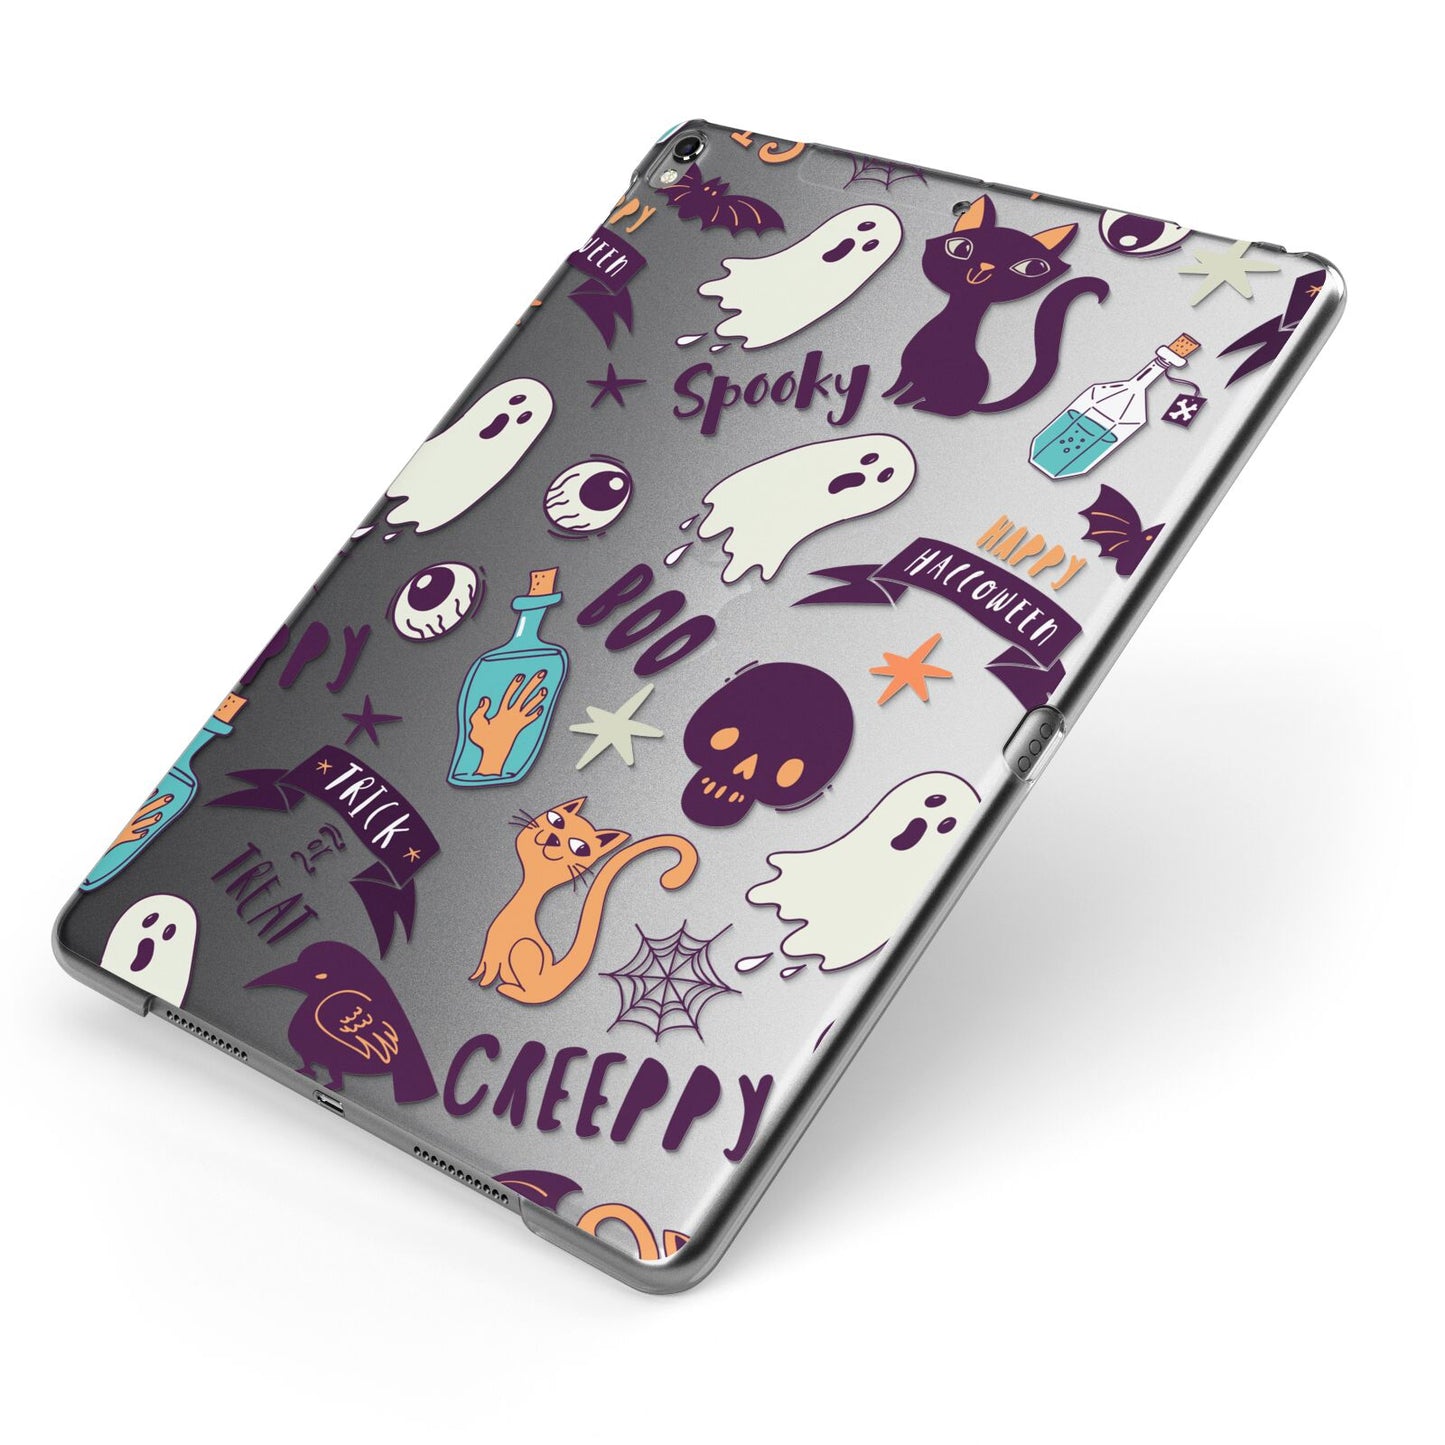 Wacky Purple and Orange Halloween Images Apple iPad Case on Grey iPad Side View